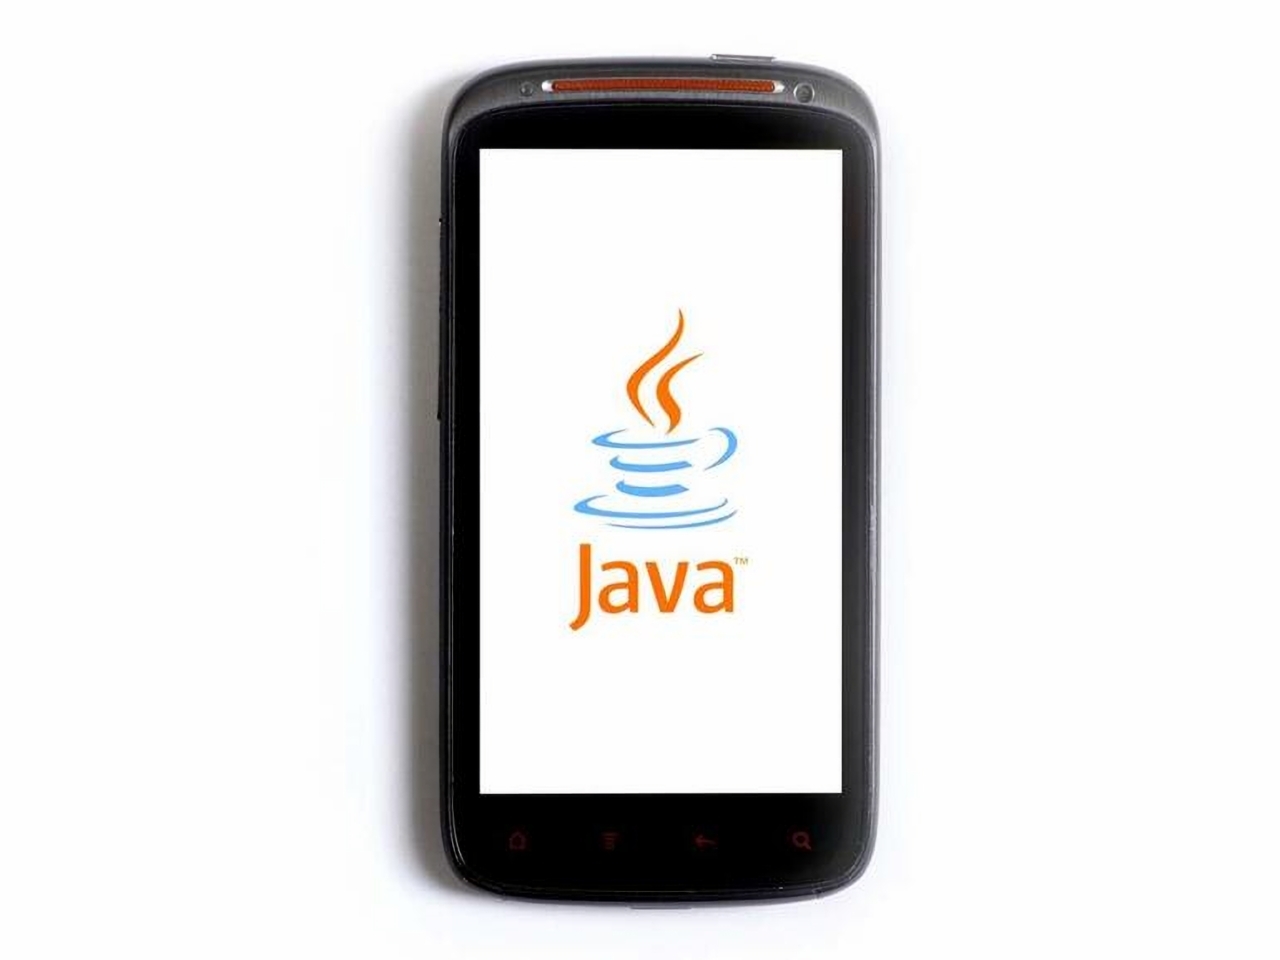  Javaが誕生した25年前--1995年に登場、台頭したテクノロジー